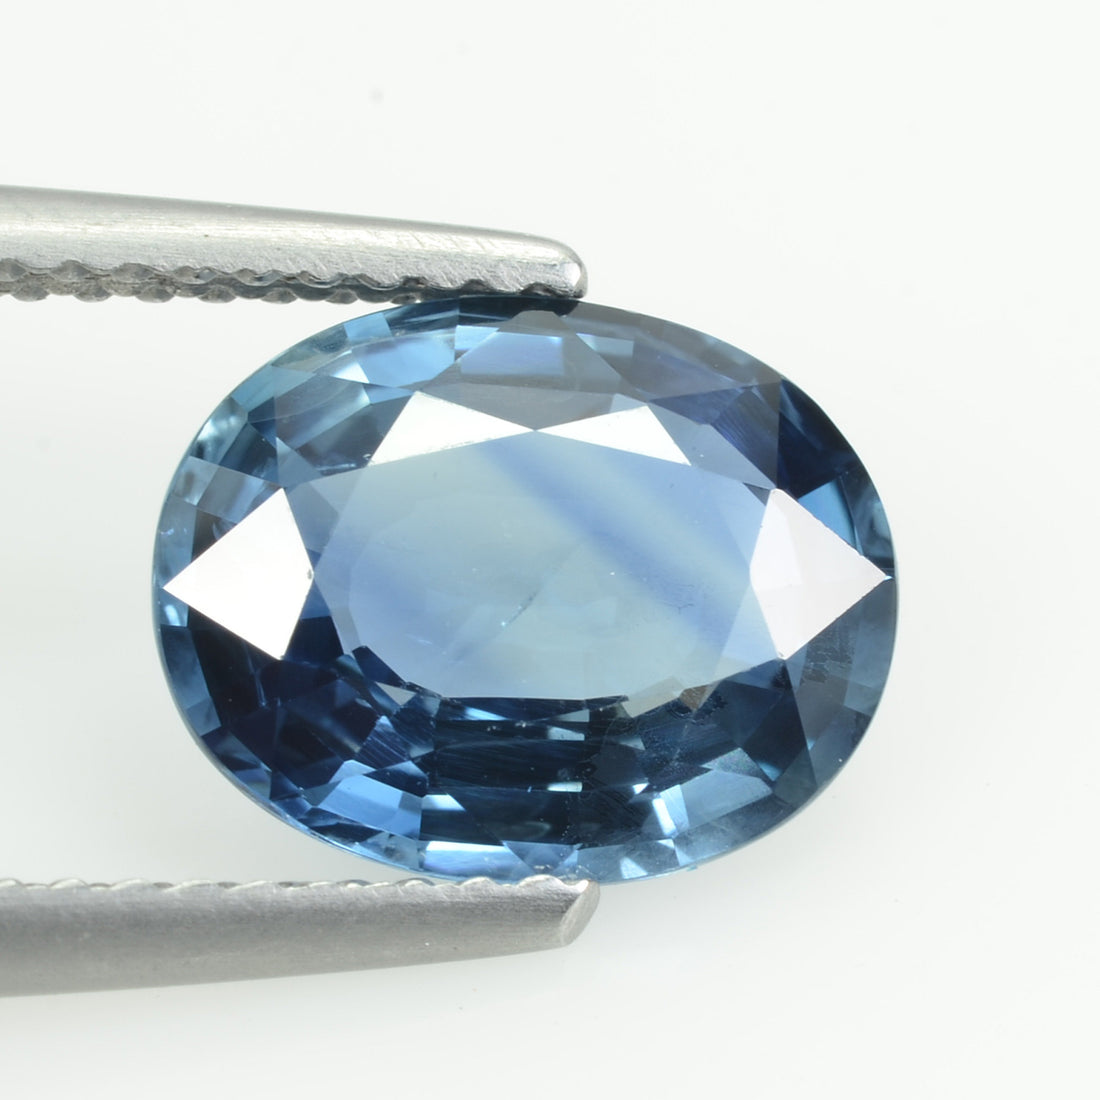 2.94 cts Natural Blue Sapphire Loose Gemstone Oval Cut - Thai Gems Export Ltd.